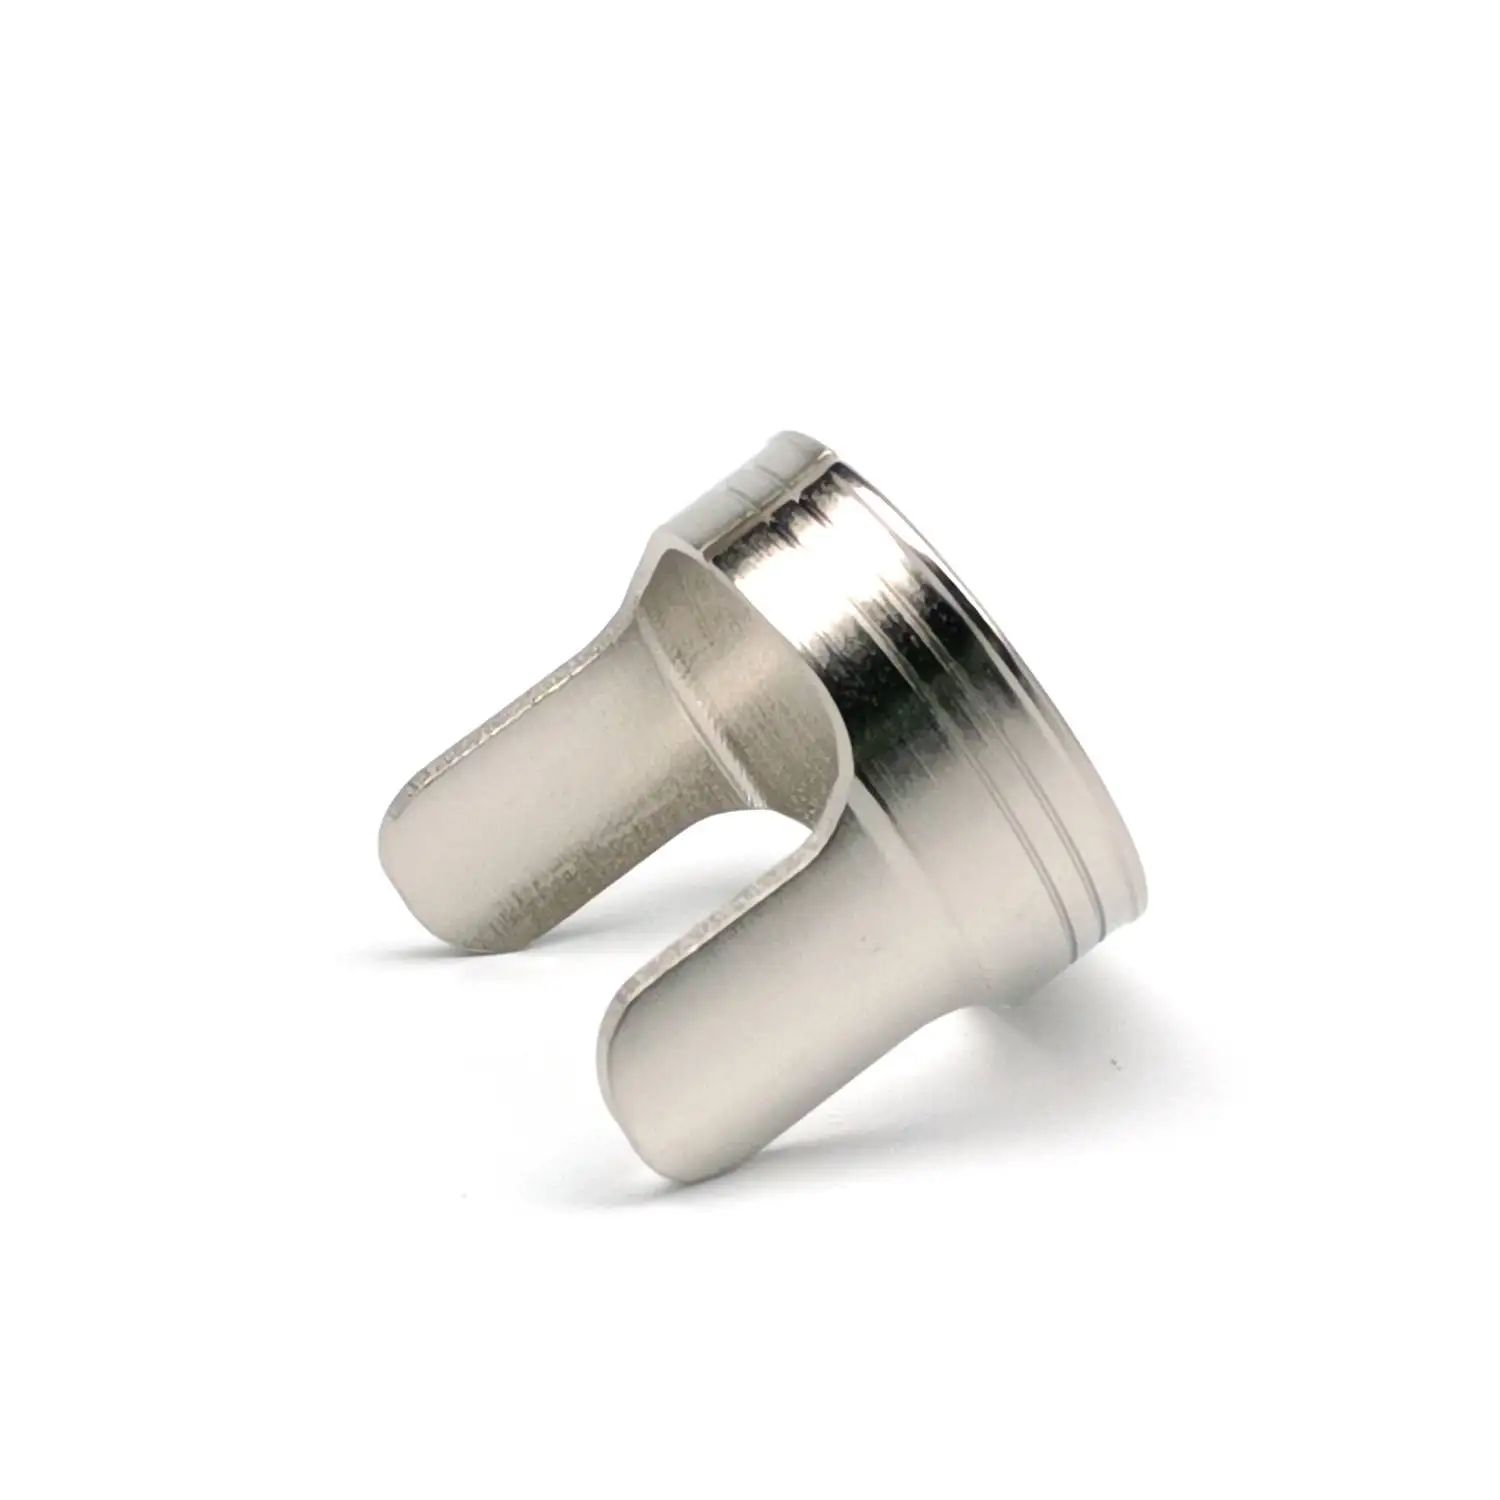 Fit FUBAG PLASMA FB 40 60 P40 P60 FP0113 FP0113-11 FP0113-09 Nozzle Tip FP0093 Electrode Spacer Swirl Ring Torch Cutter Parts enlarge